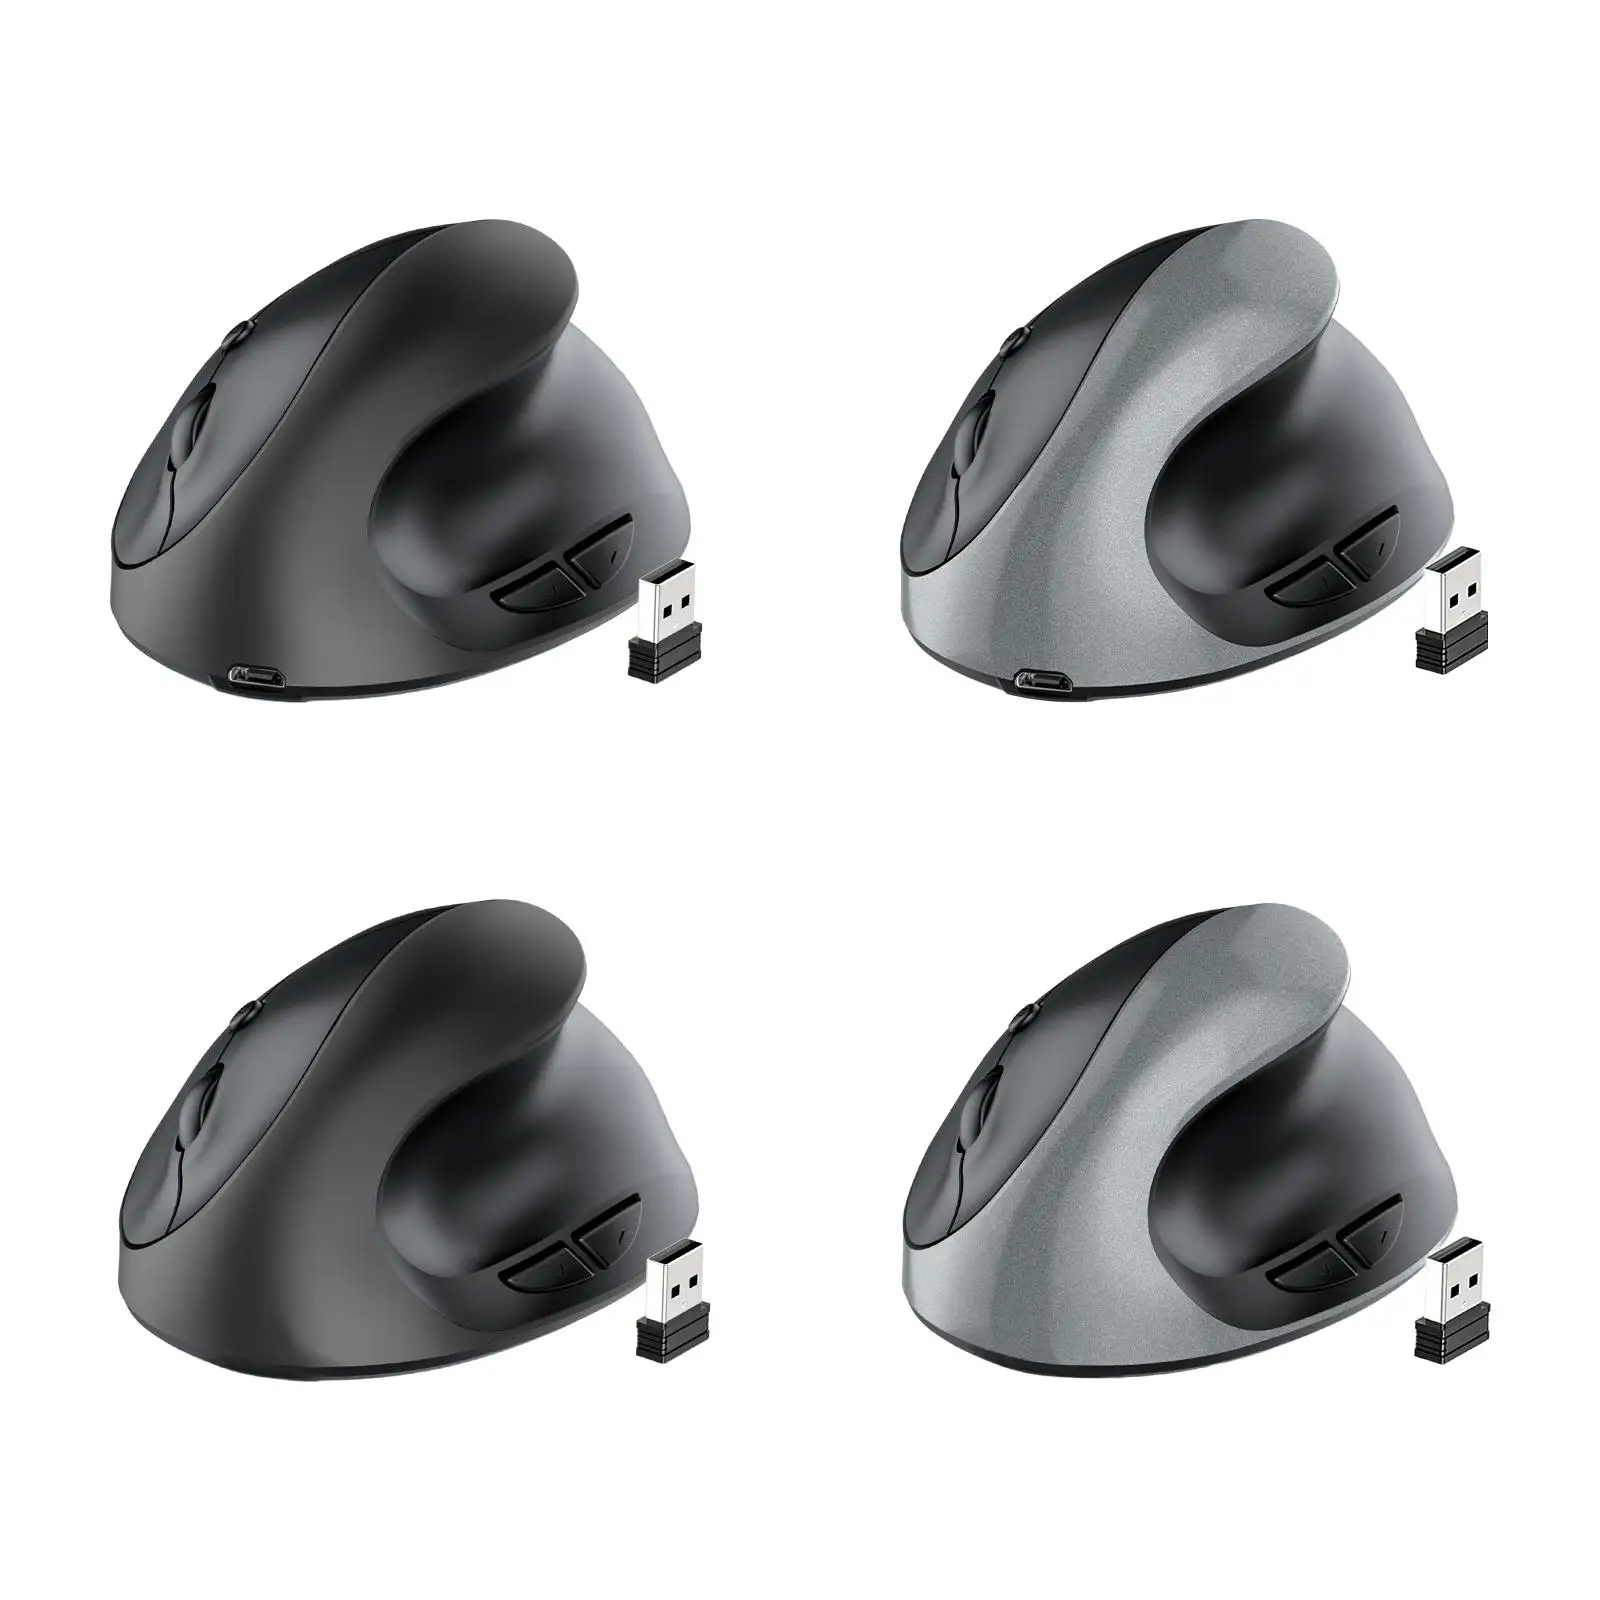 Vertical Mouse Ergonomic Gaming Mouse 6 Buttons for  Desktop Laptop